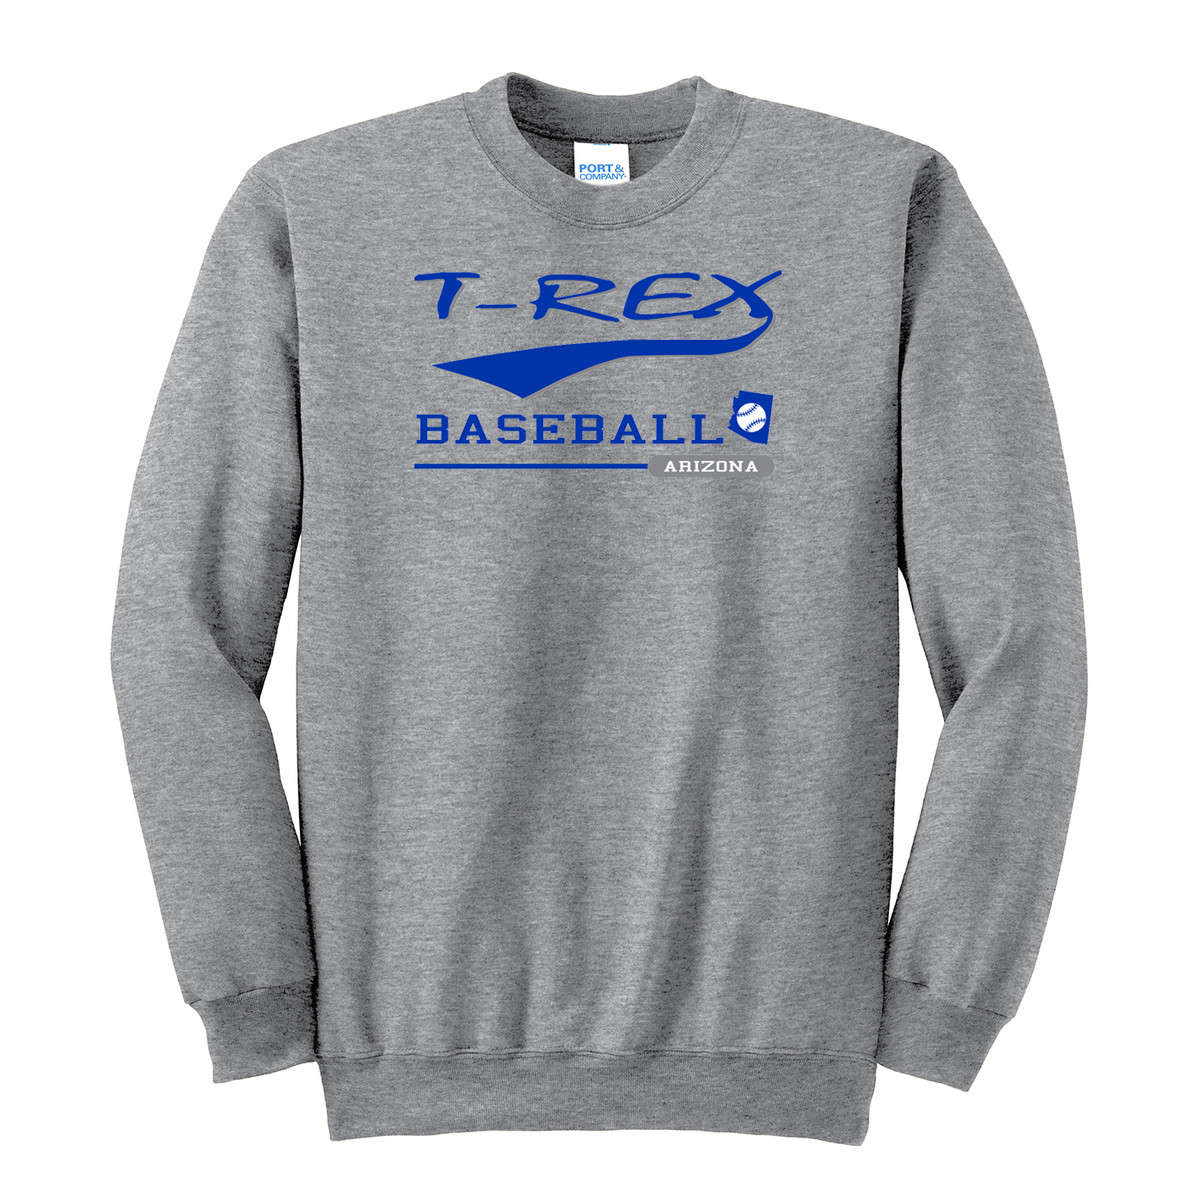 T-Rex Baseball Crew Neck Sweater